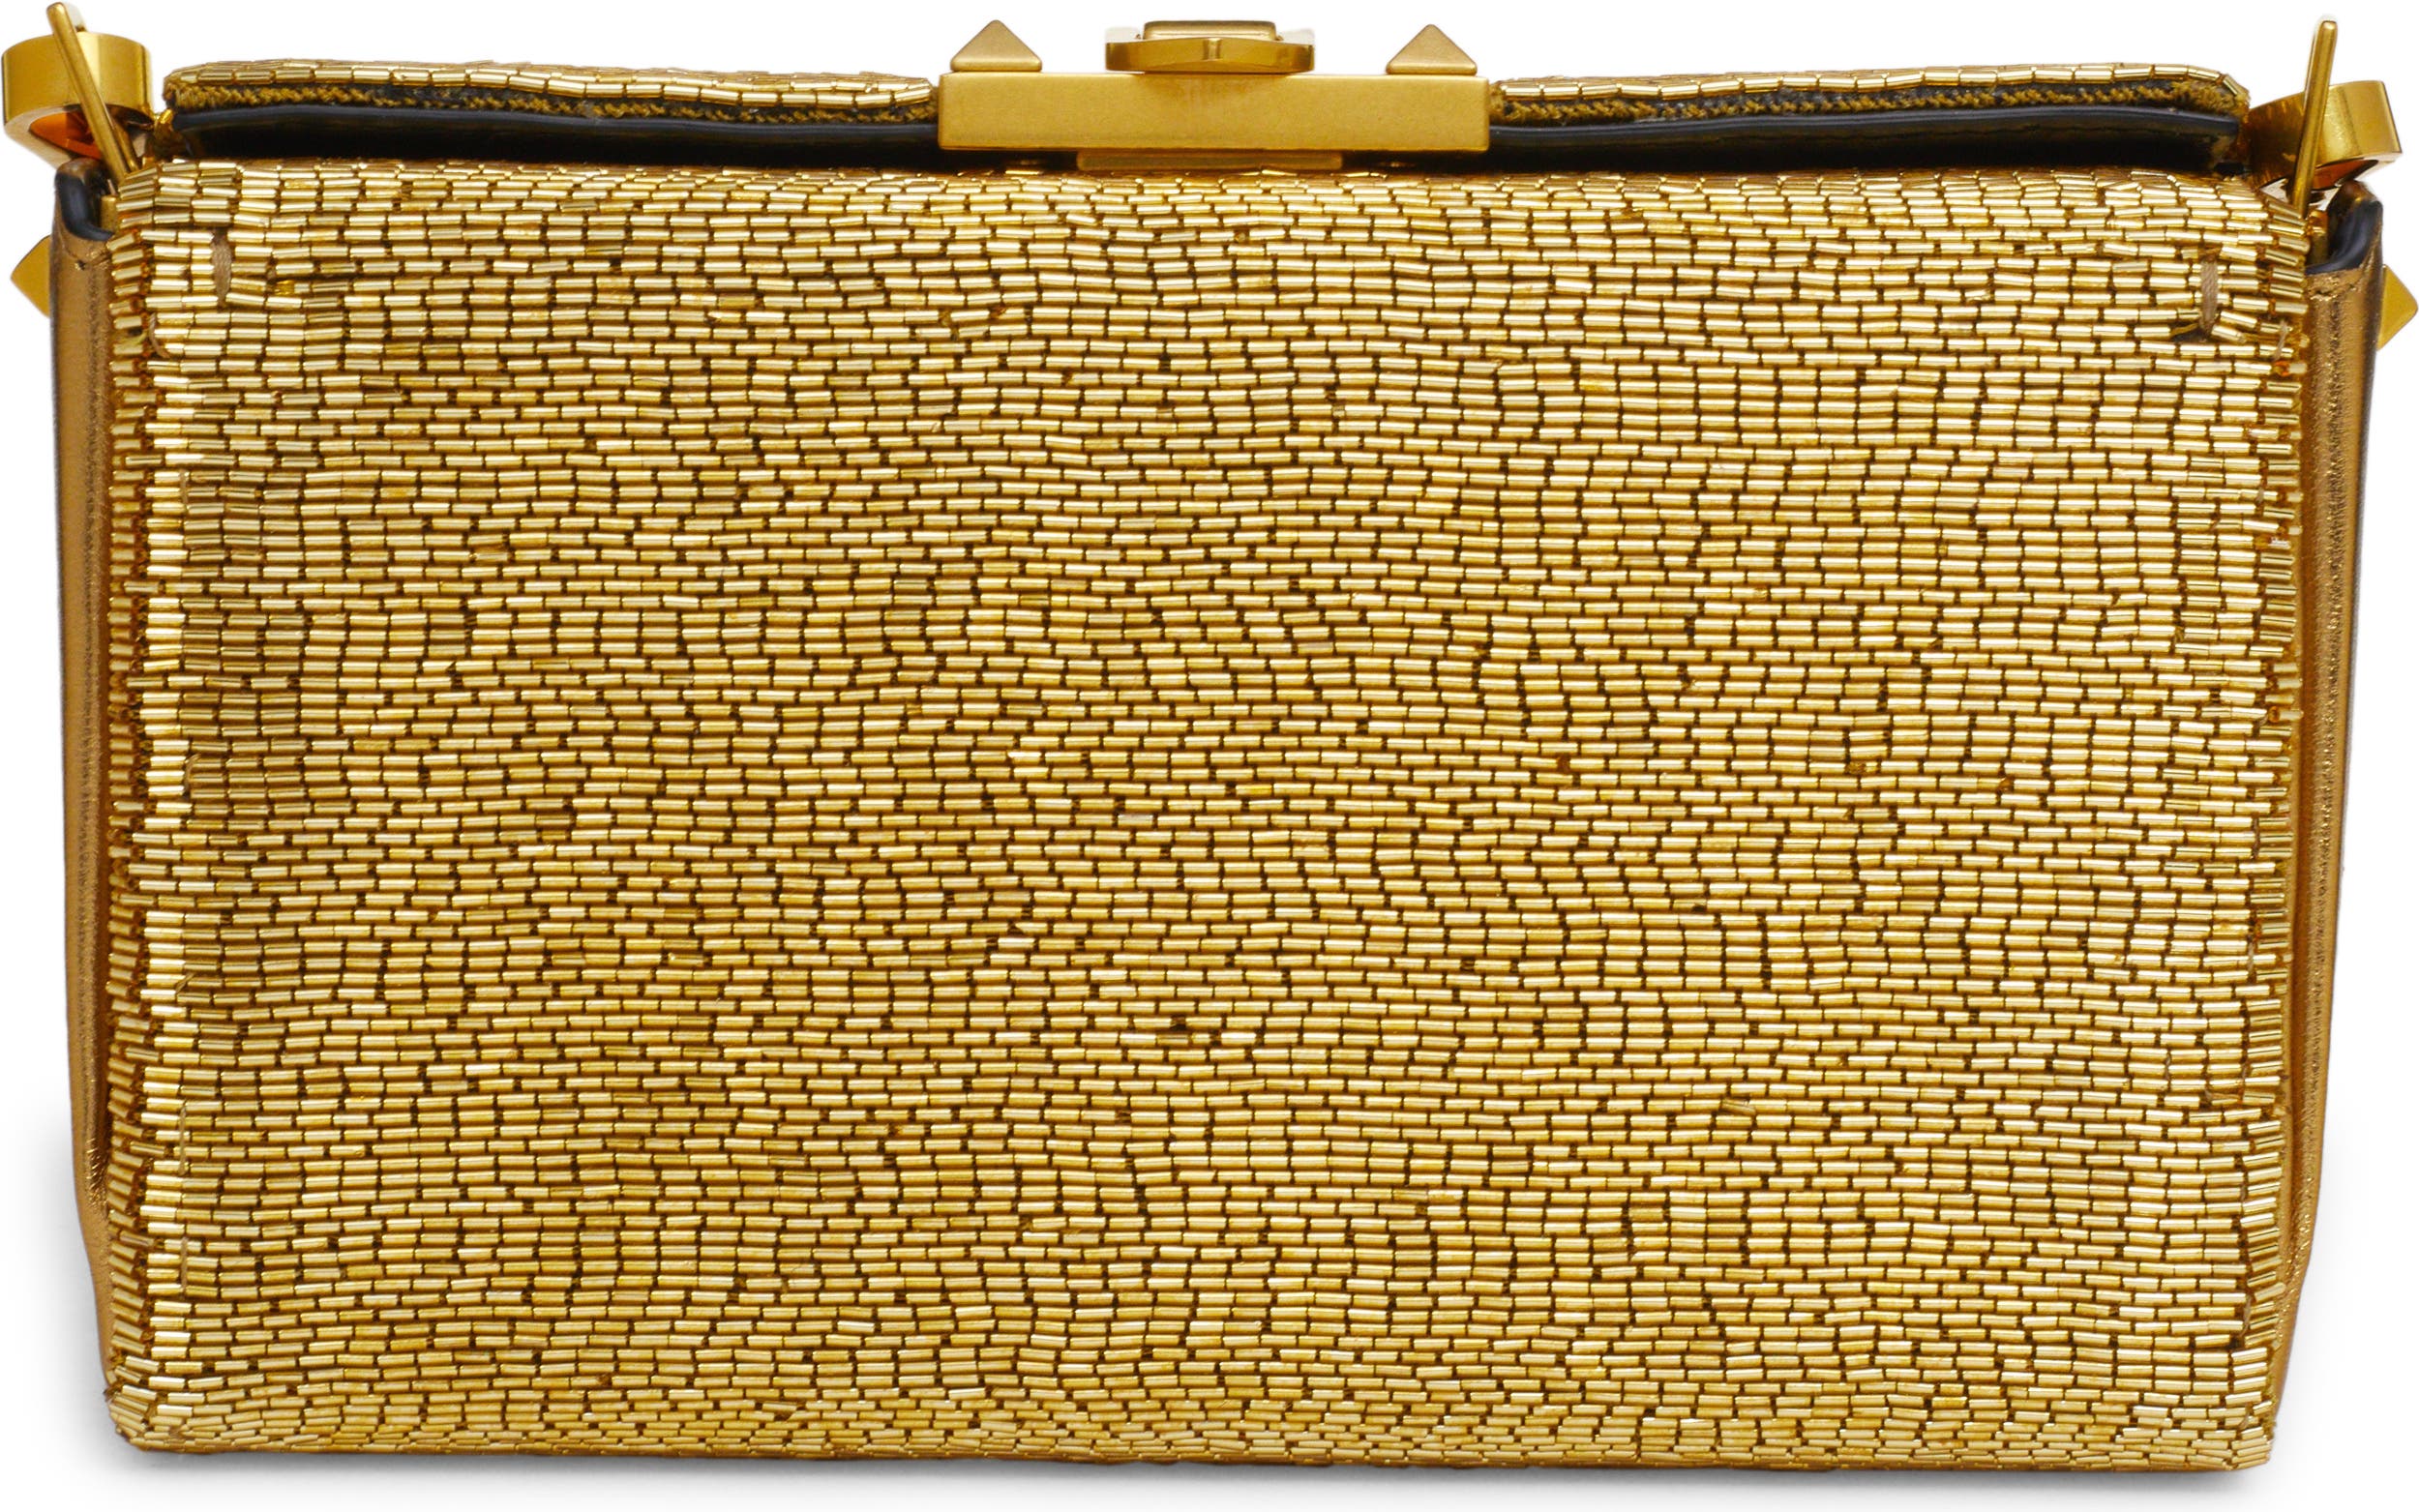 BADGLEY MISCHKA Carry CLUTCH EMBELLISHED Evening Shoulder Bag New w/Gift Box